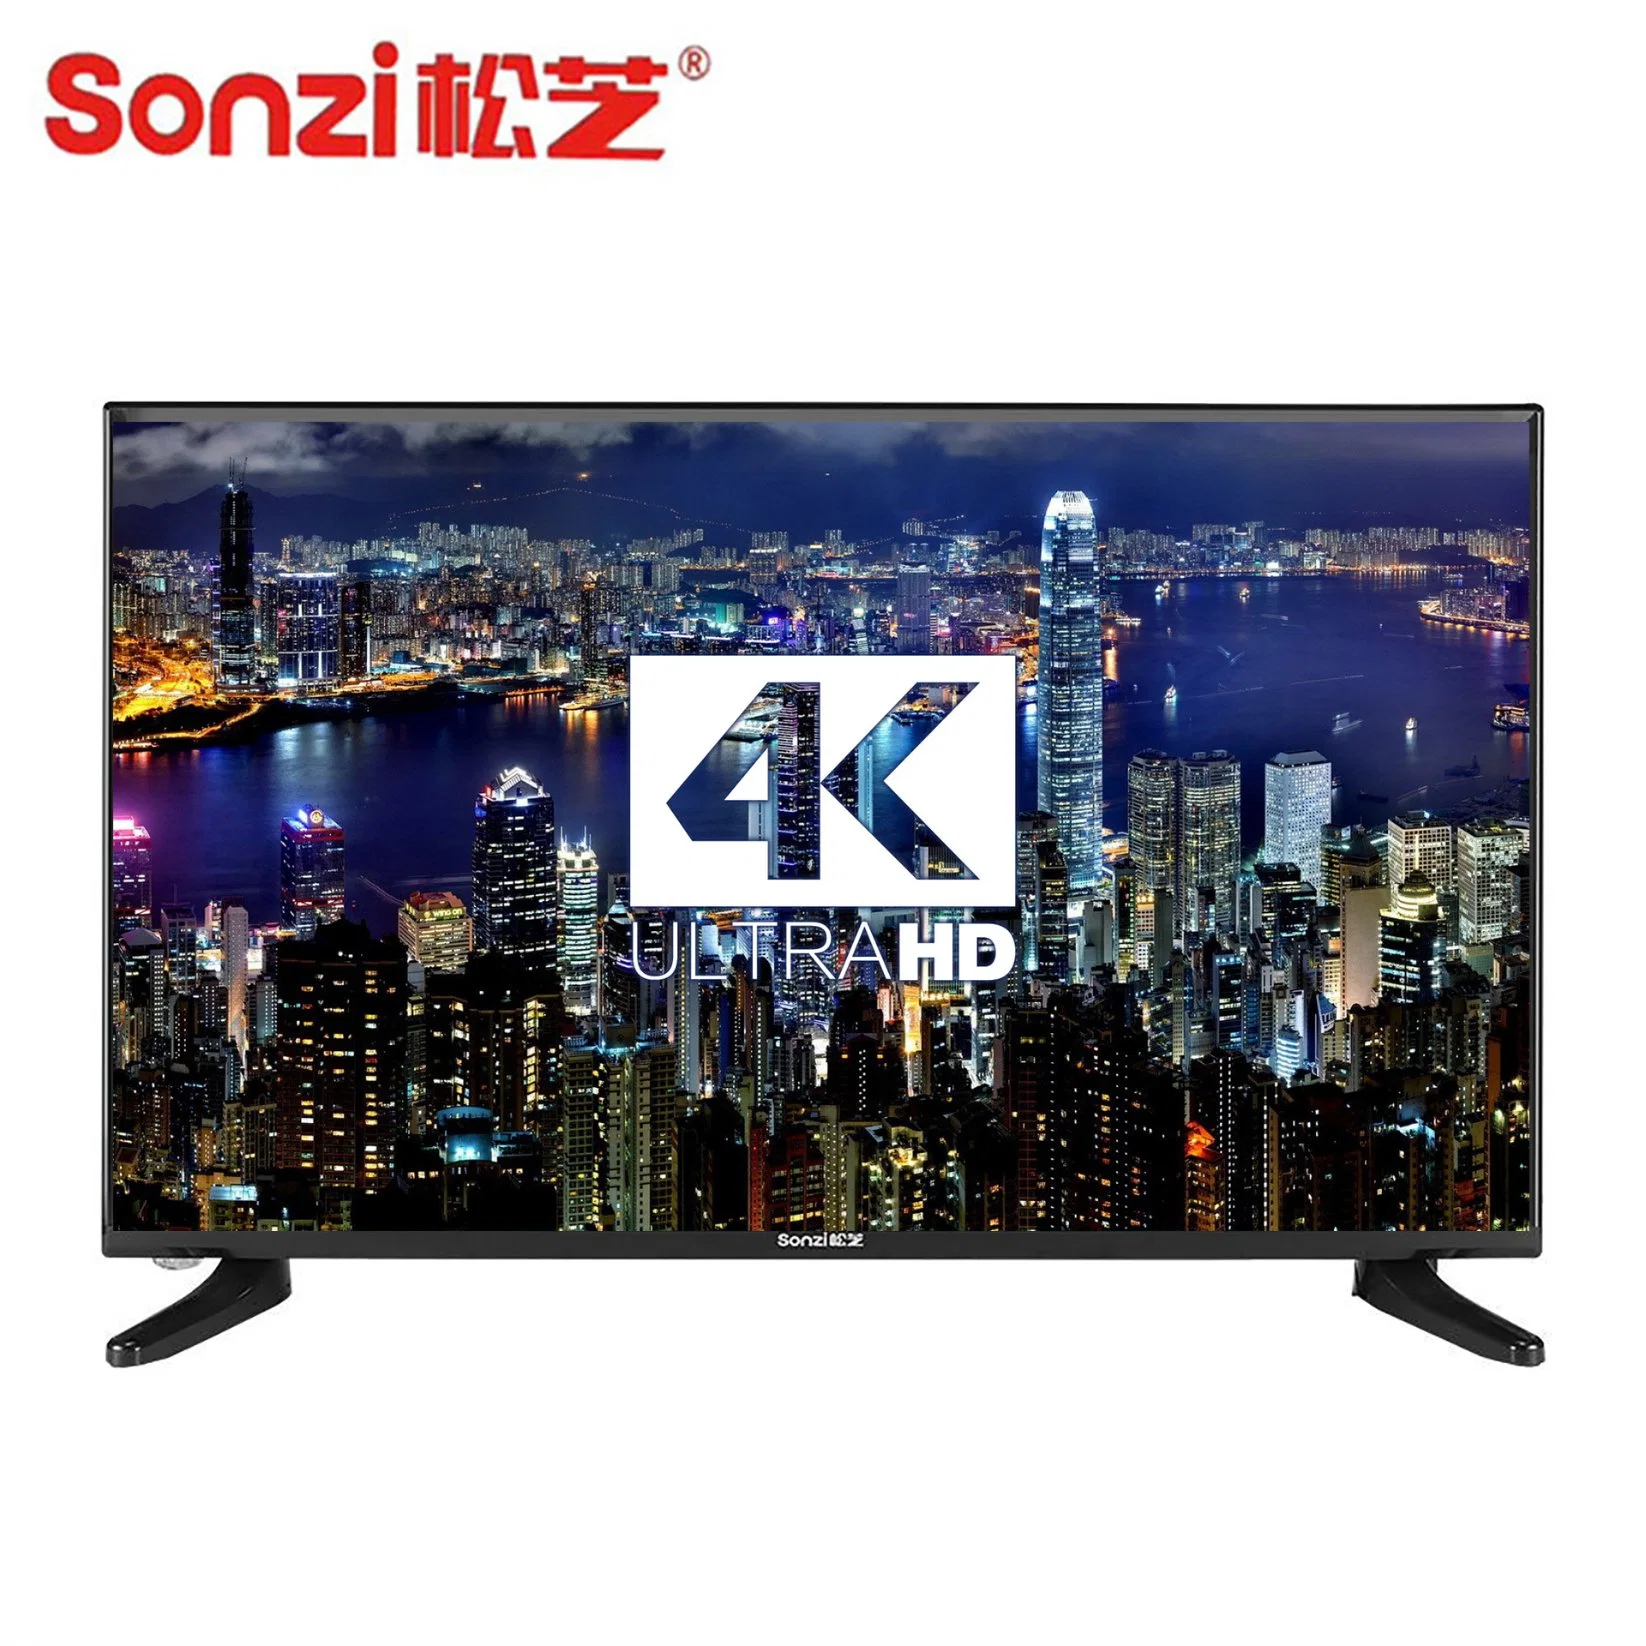 China Bester Preis LED-TV 32 Zoll bis 100 Zoll Rahmenloser Smart TV mit LG Samsung TV-Bildschirm